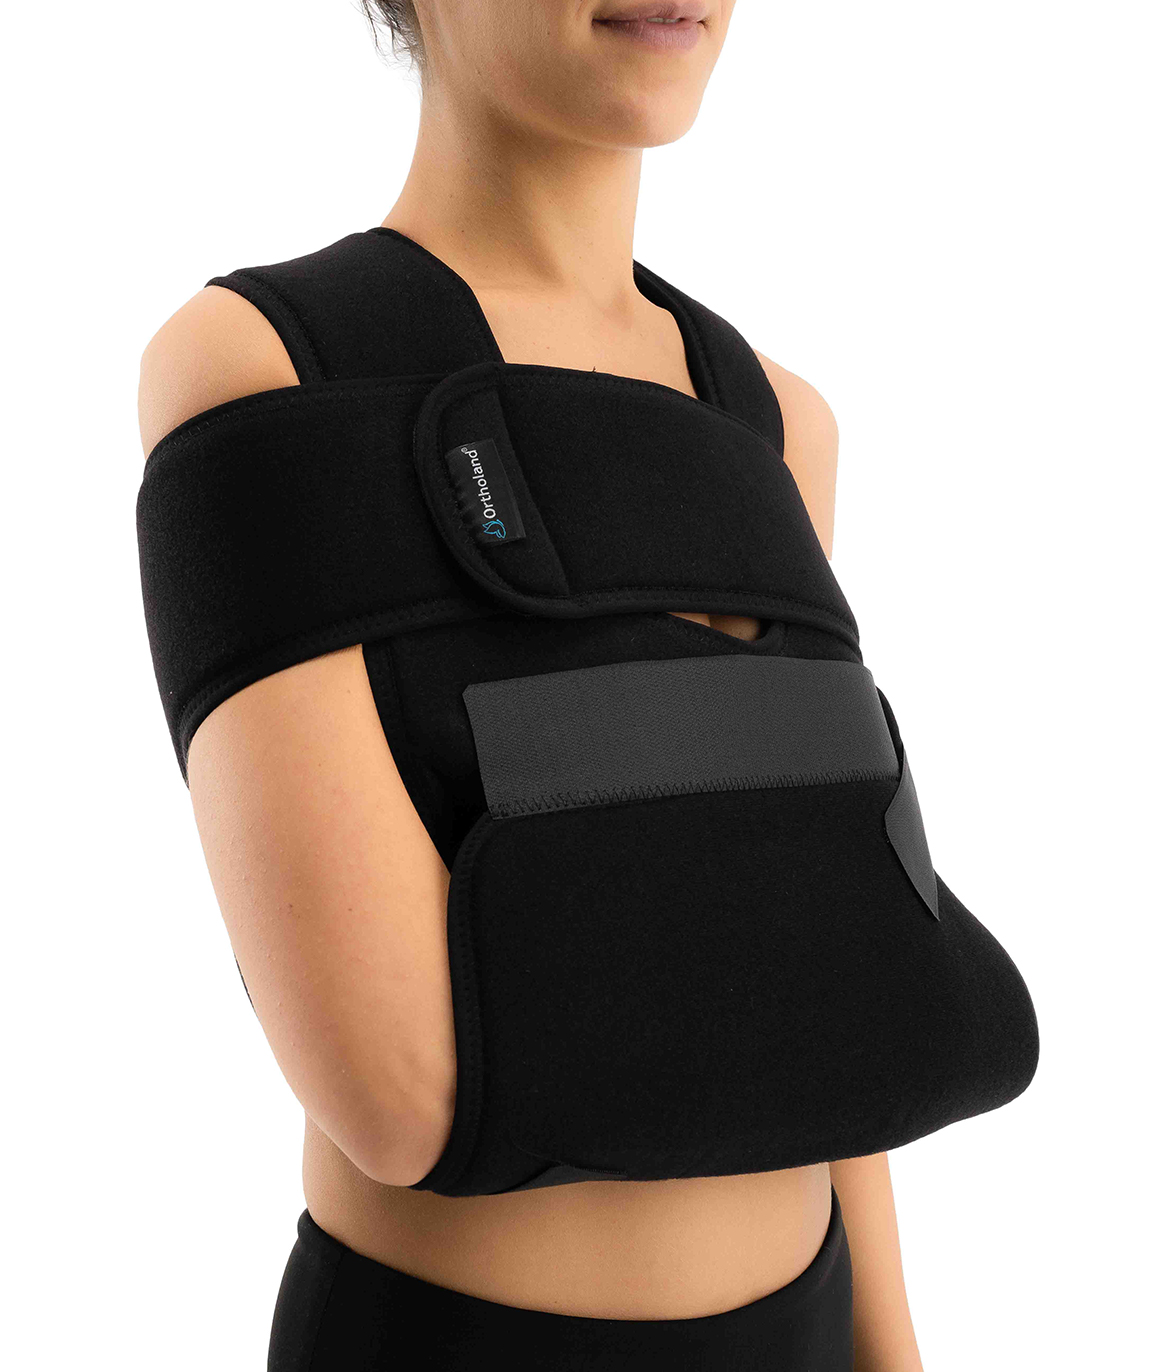 Velpeau Bandage, Hand - Arm - Shoulder splint supports